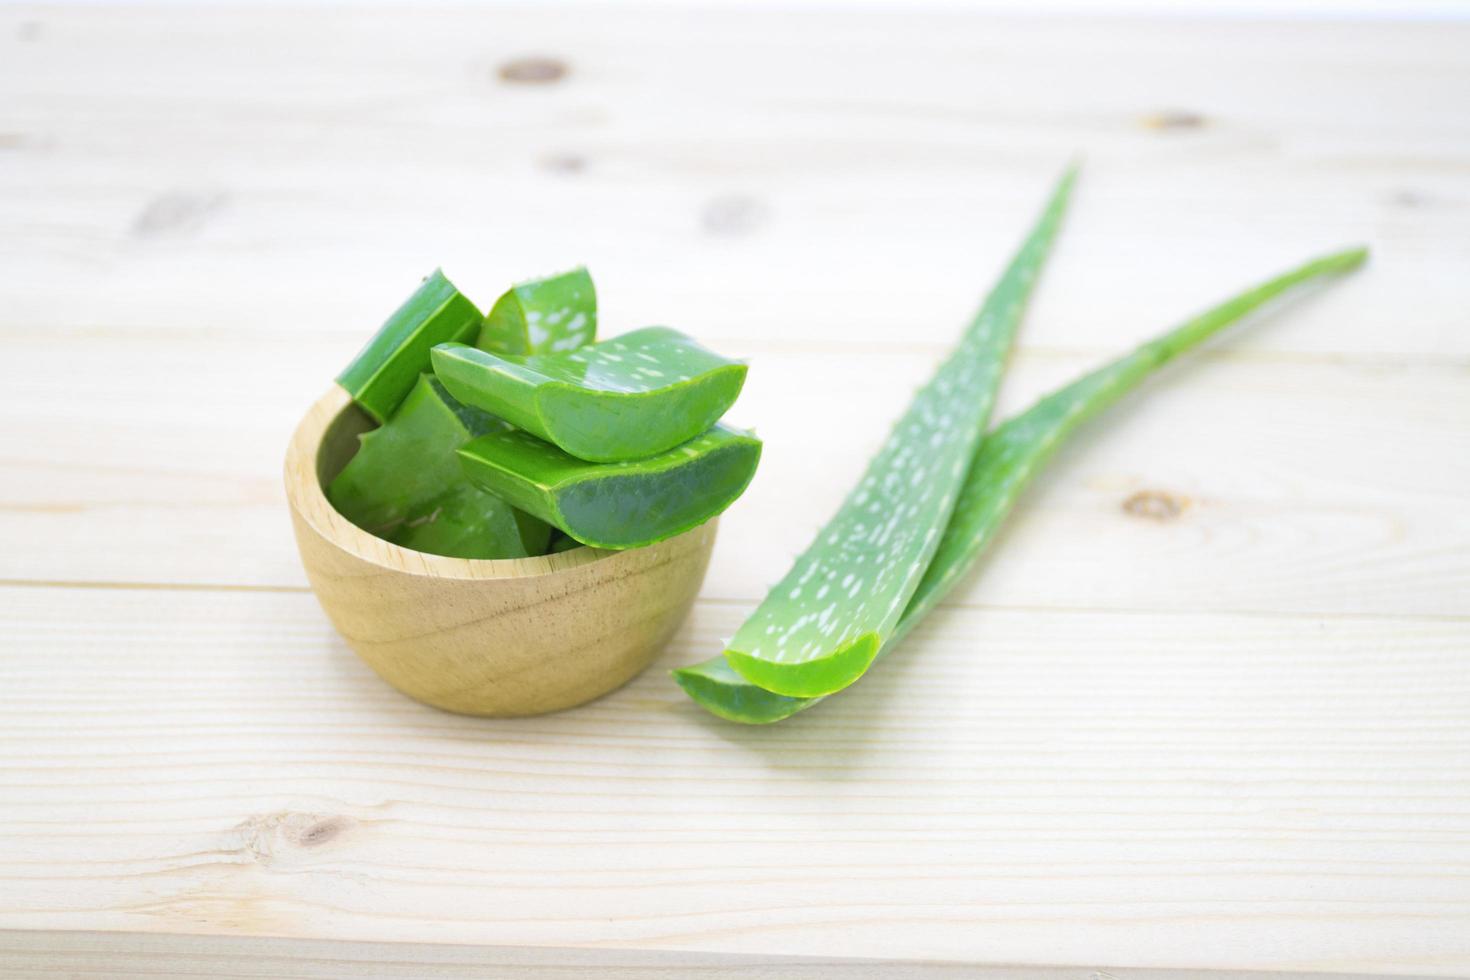 Green fresh Aloe vera sliced fresh aloe for herbal medical plant and beauty spa on wood table photo